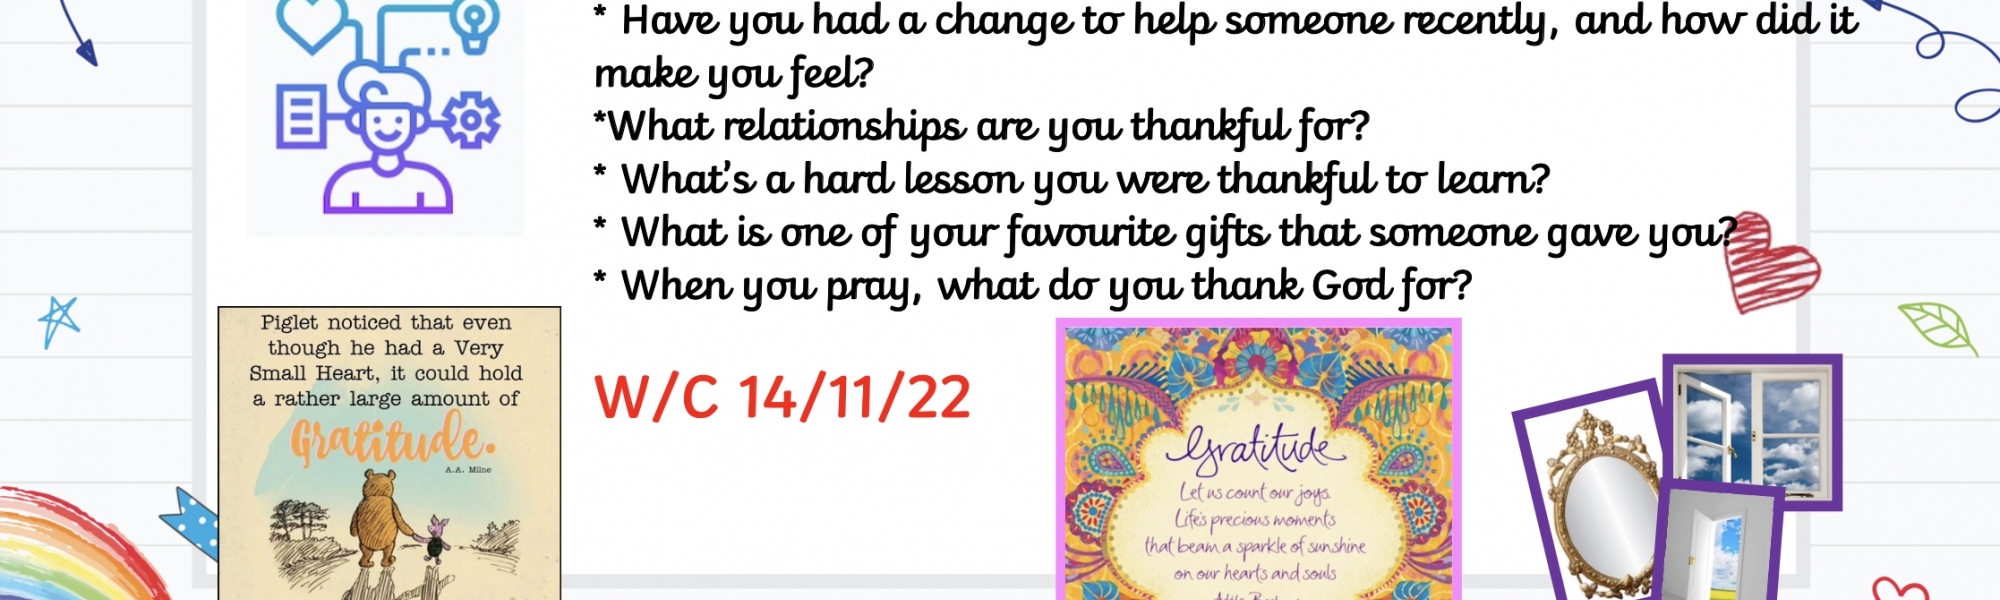 W/C 14/11/22 Thankfulness